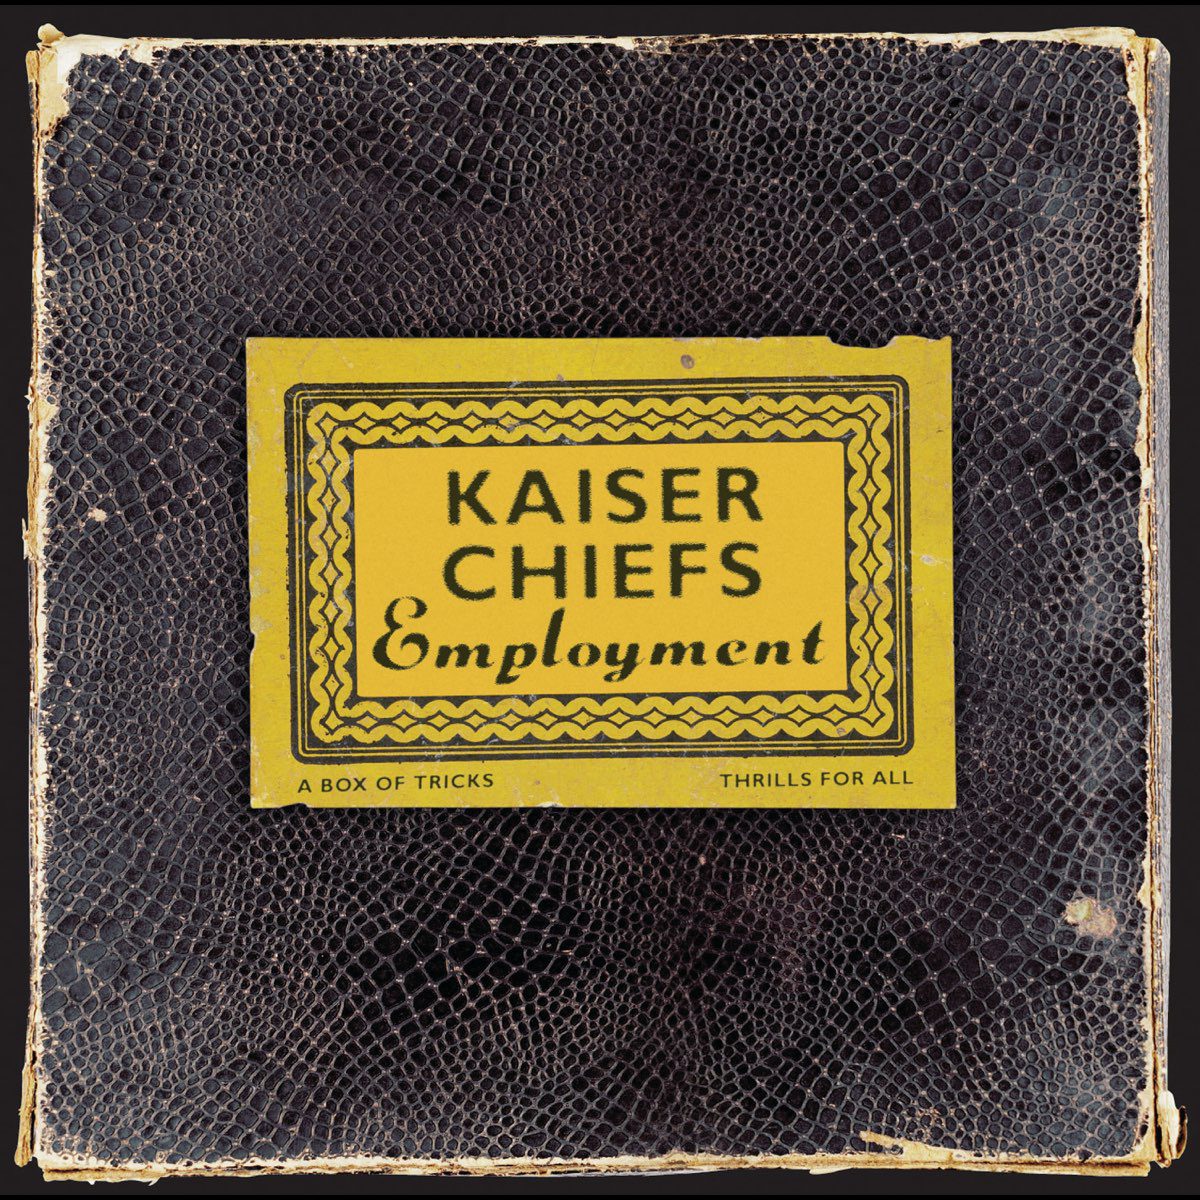 Employment by Kaiser Chiefs